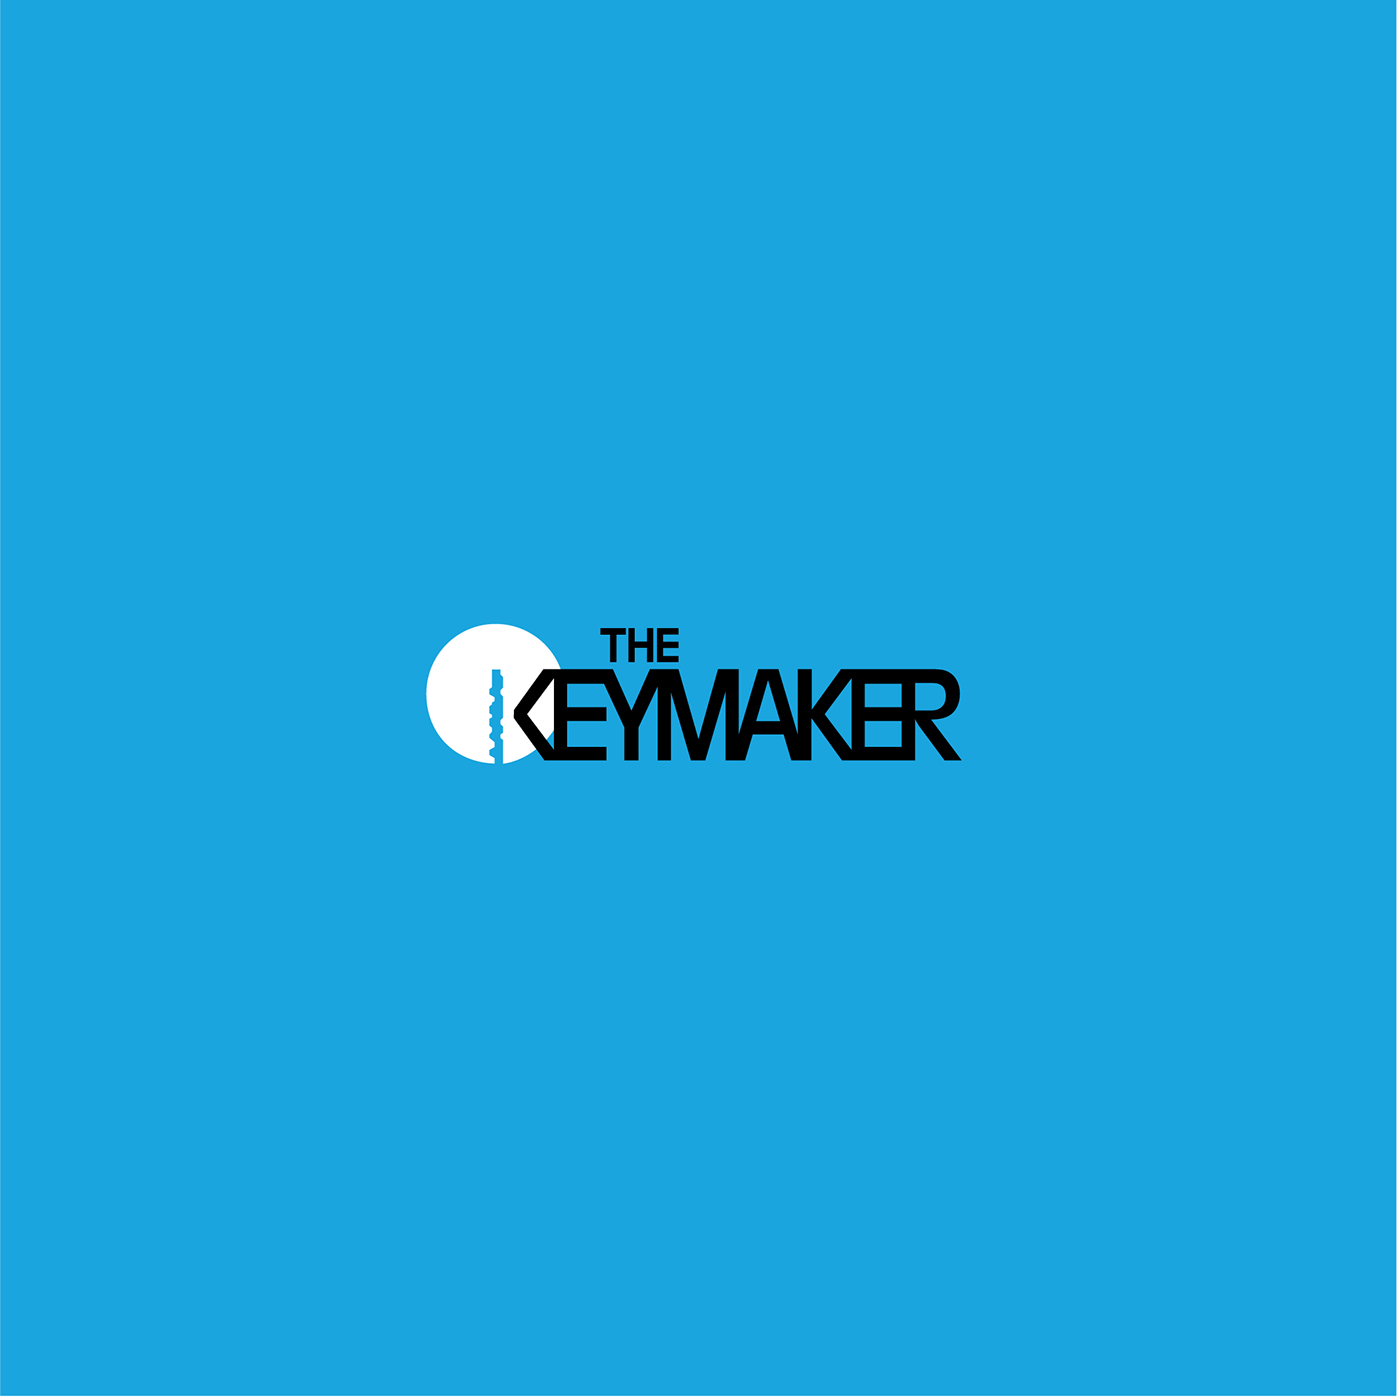 The Keymaker on Behance